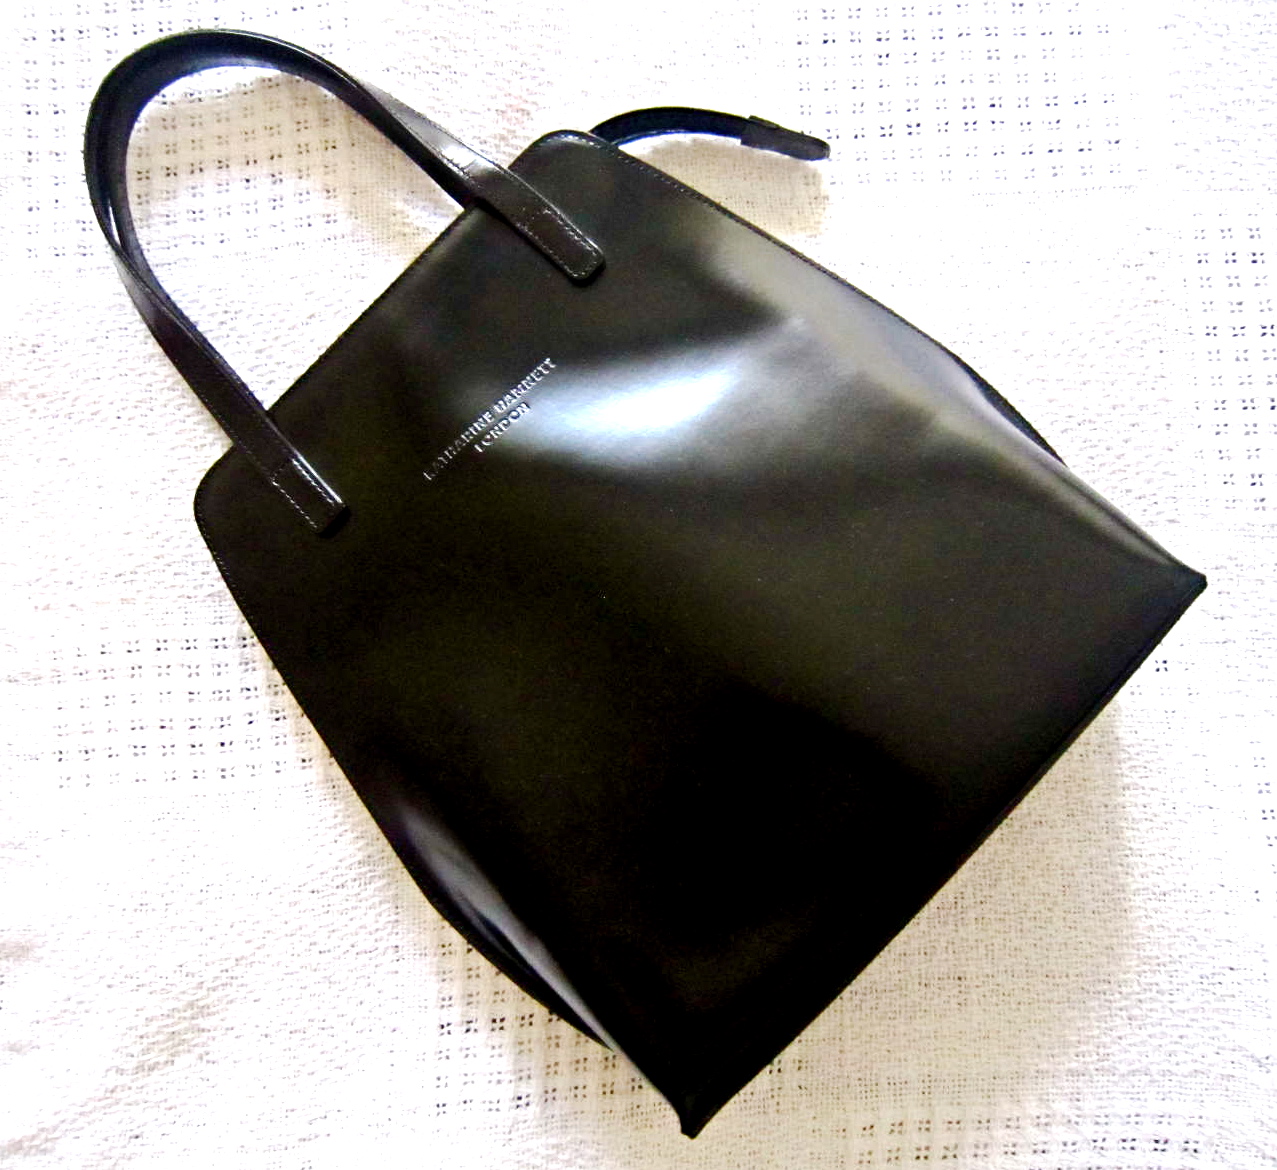 Katharine Hamnett London Black Leather Handbag